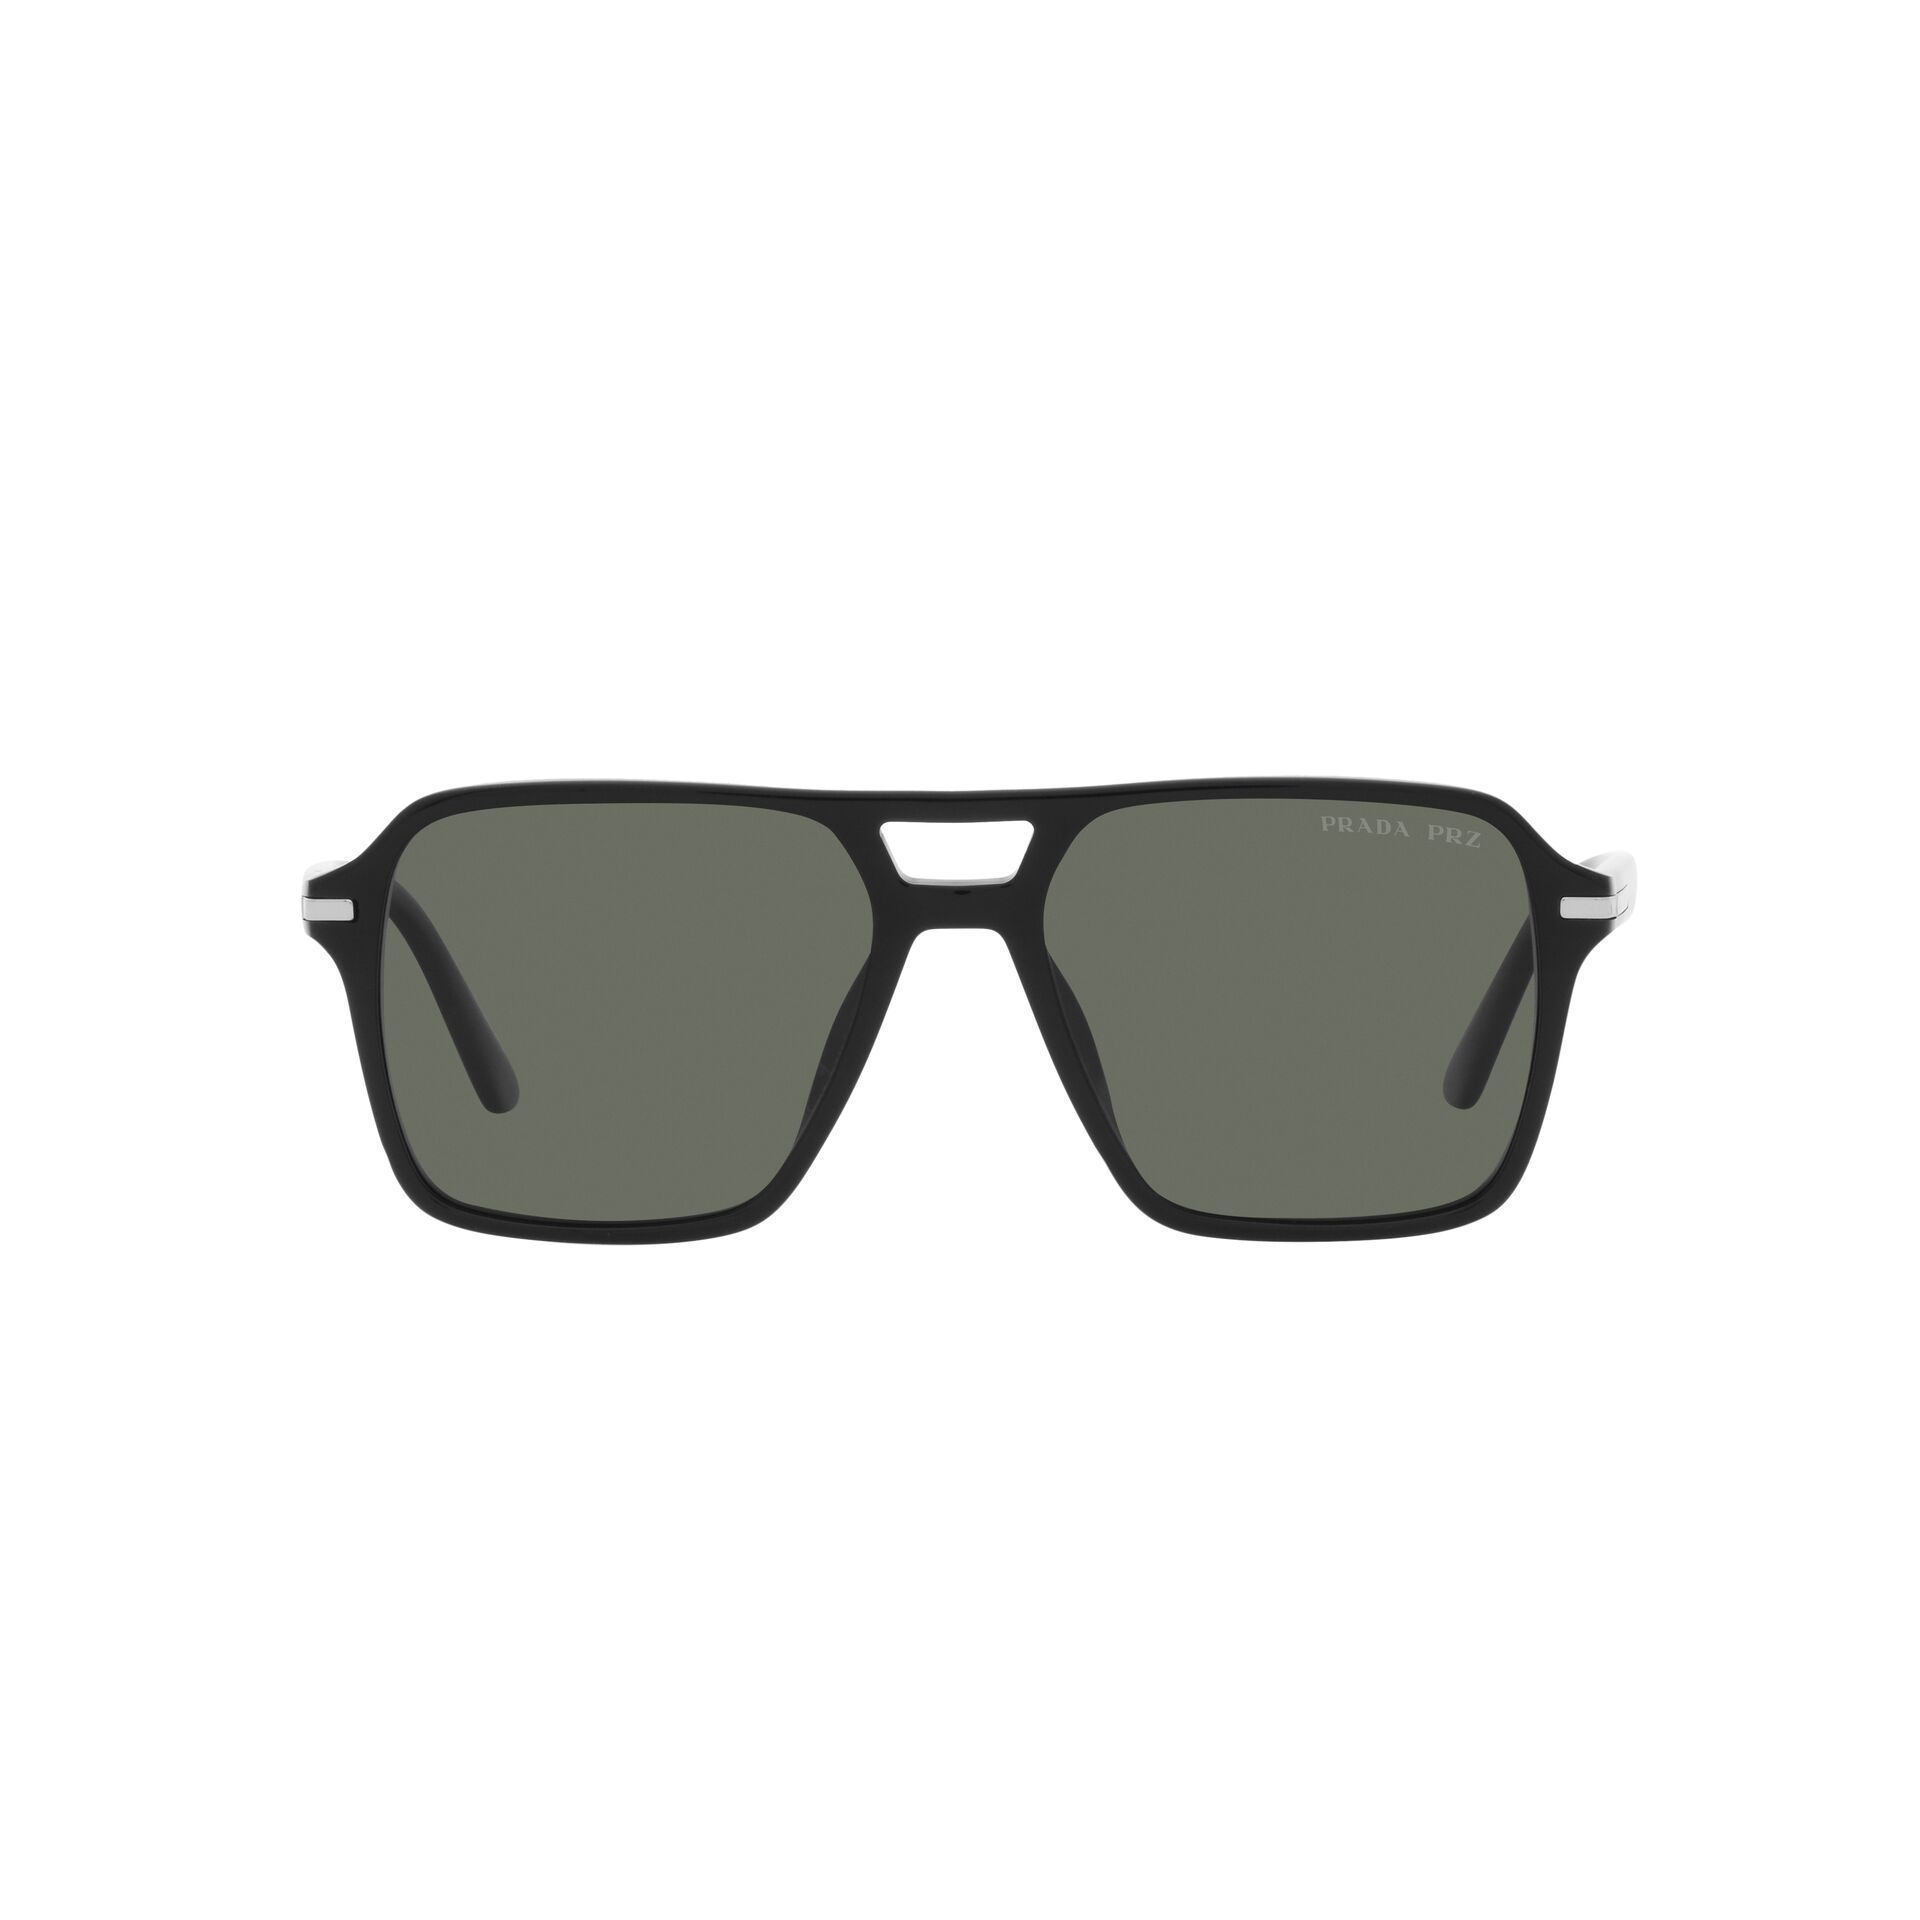 PR 20YS Square Sunglasses 1AB03R - size 55